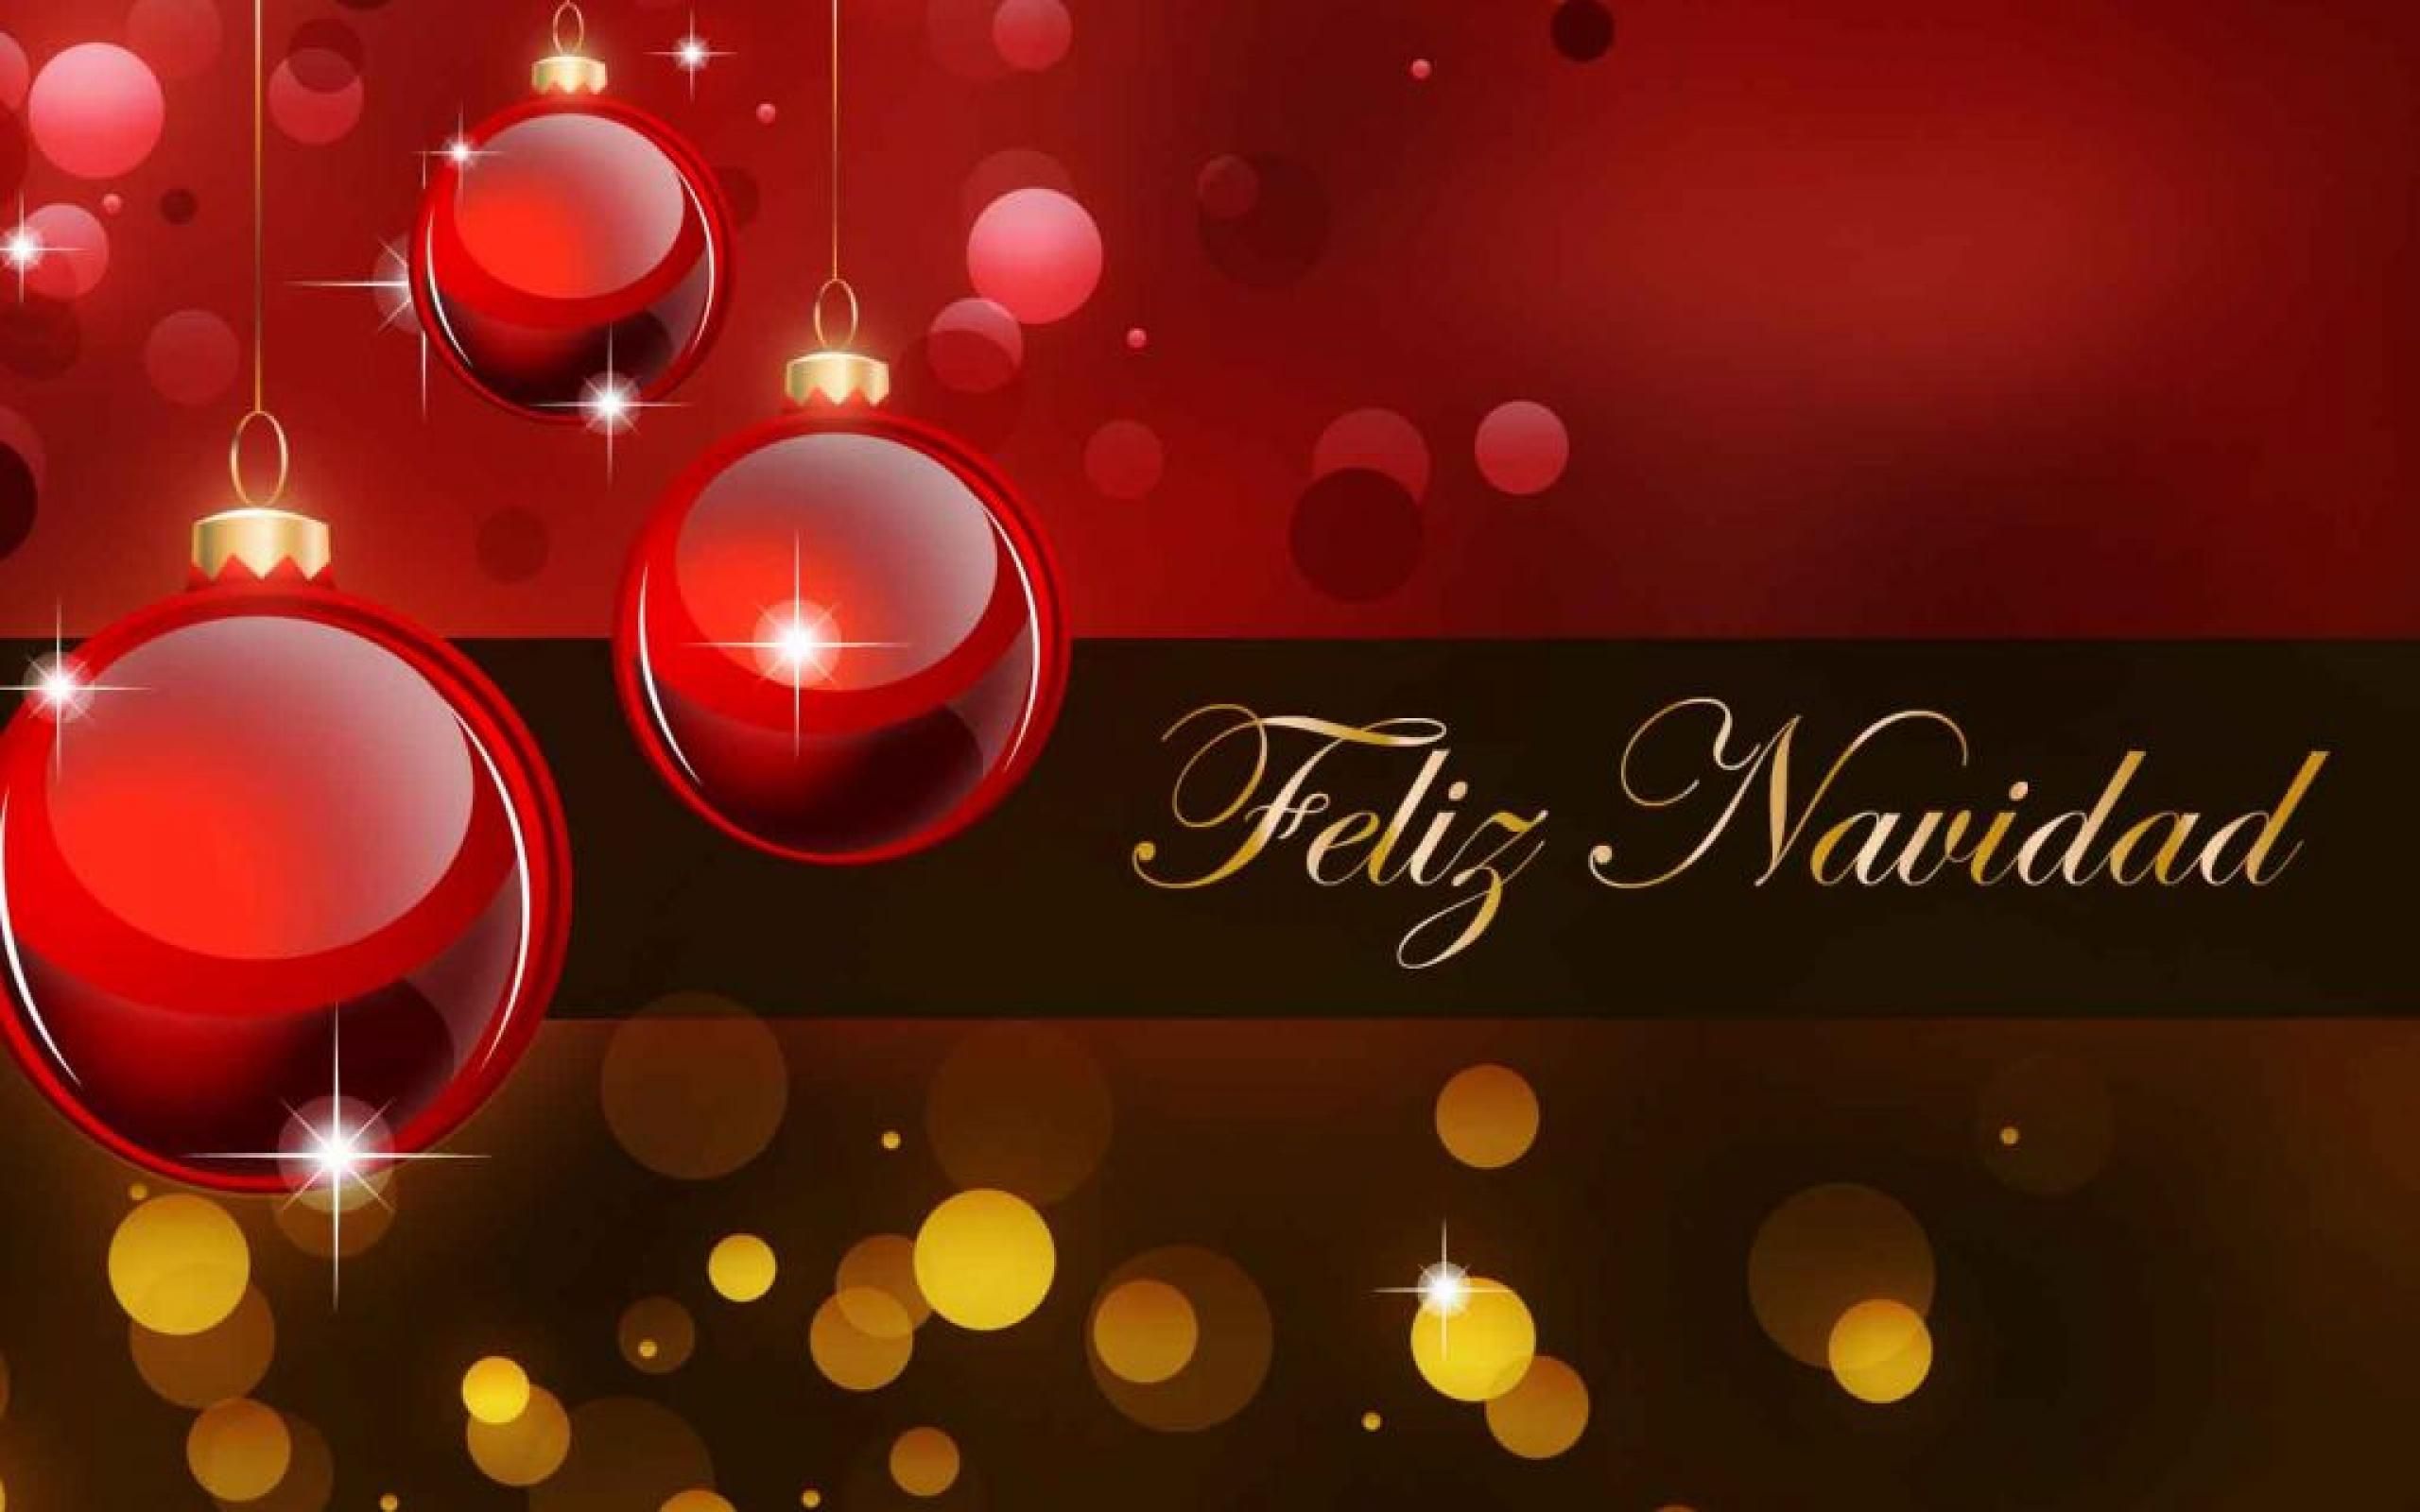 3869 Fondos Navideños Gratis  Pixabay  Free christmas backgrounds  Christmas background Christmas decorations